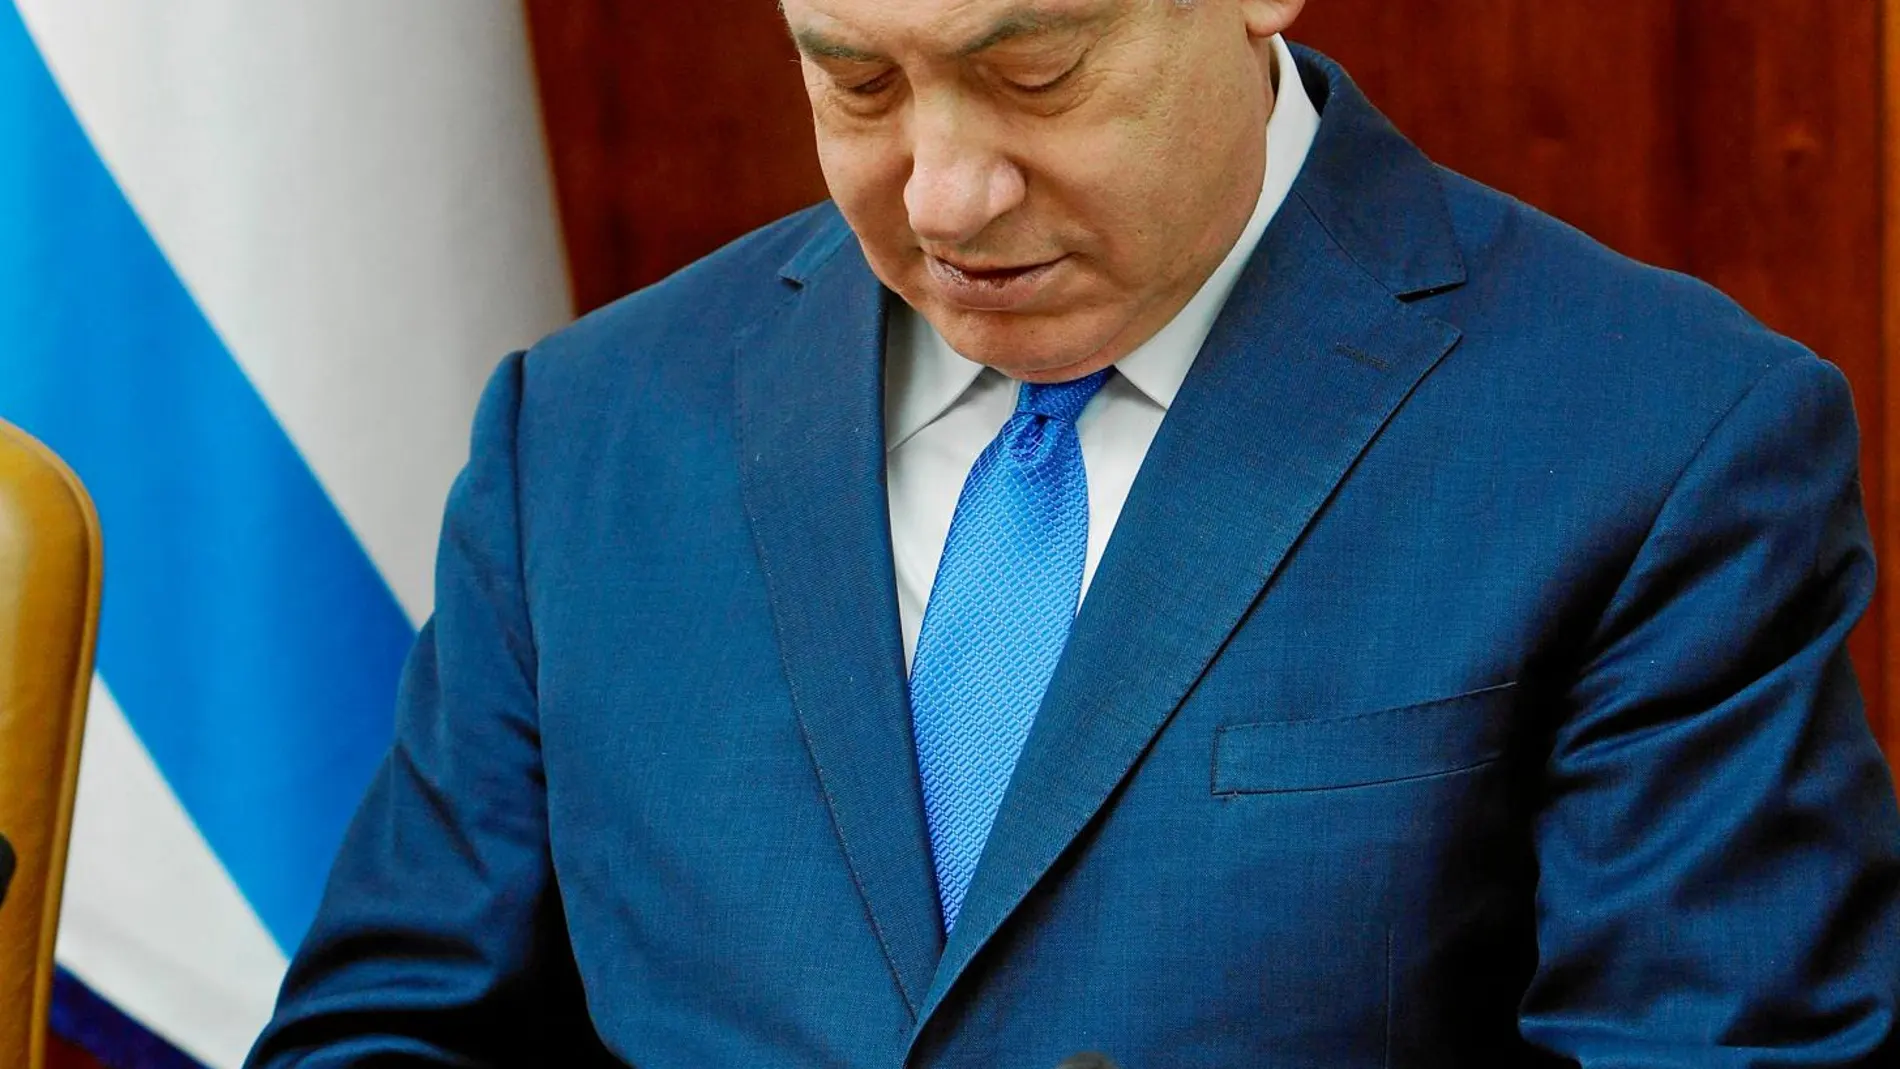 Netanyahu asistió ayer a la reunión semanal del consejo de ministros / EFE